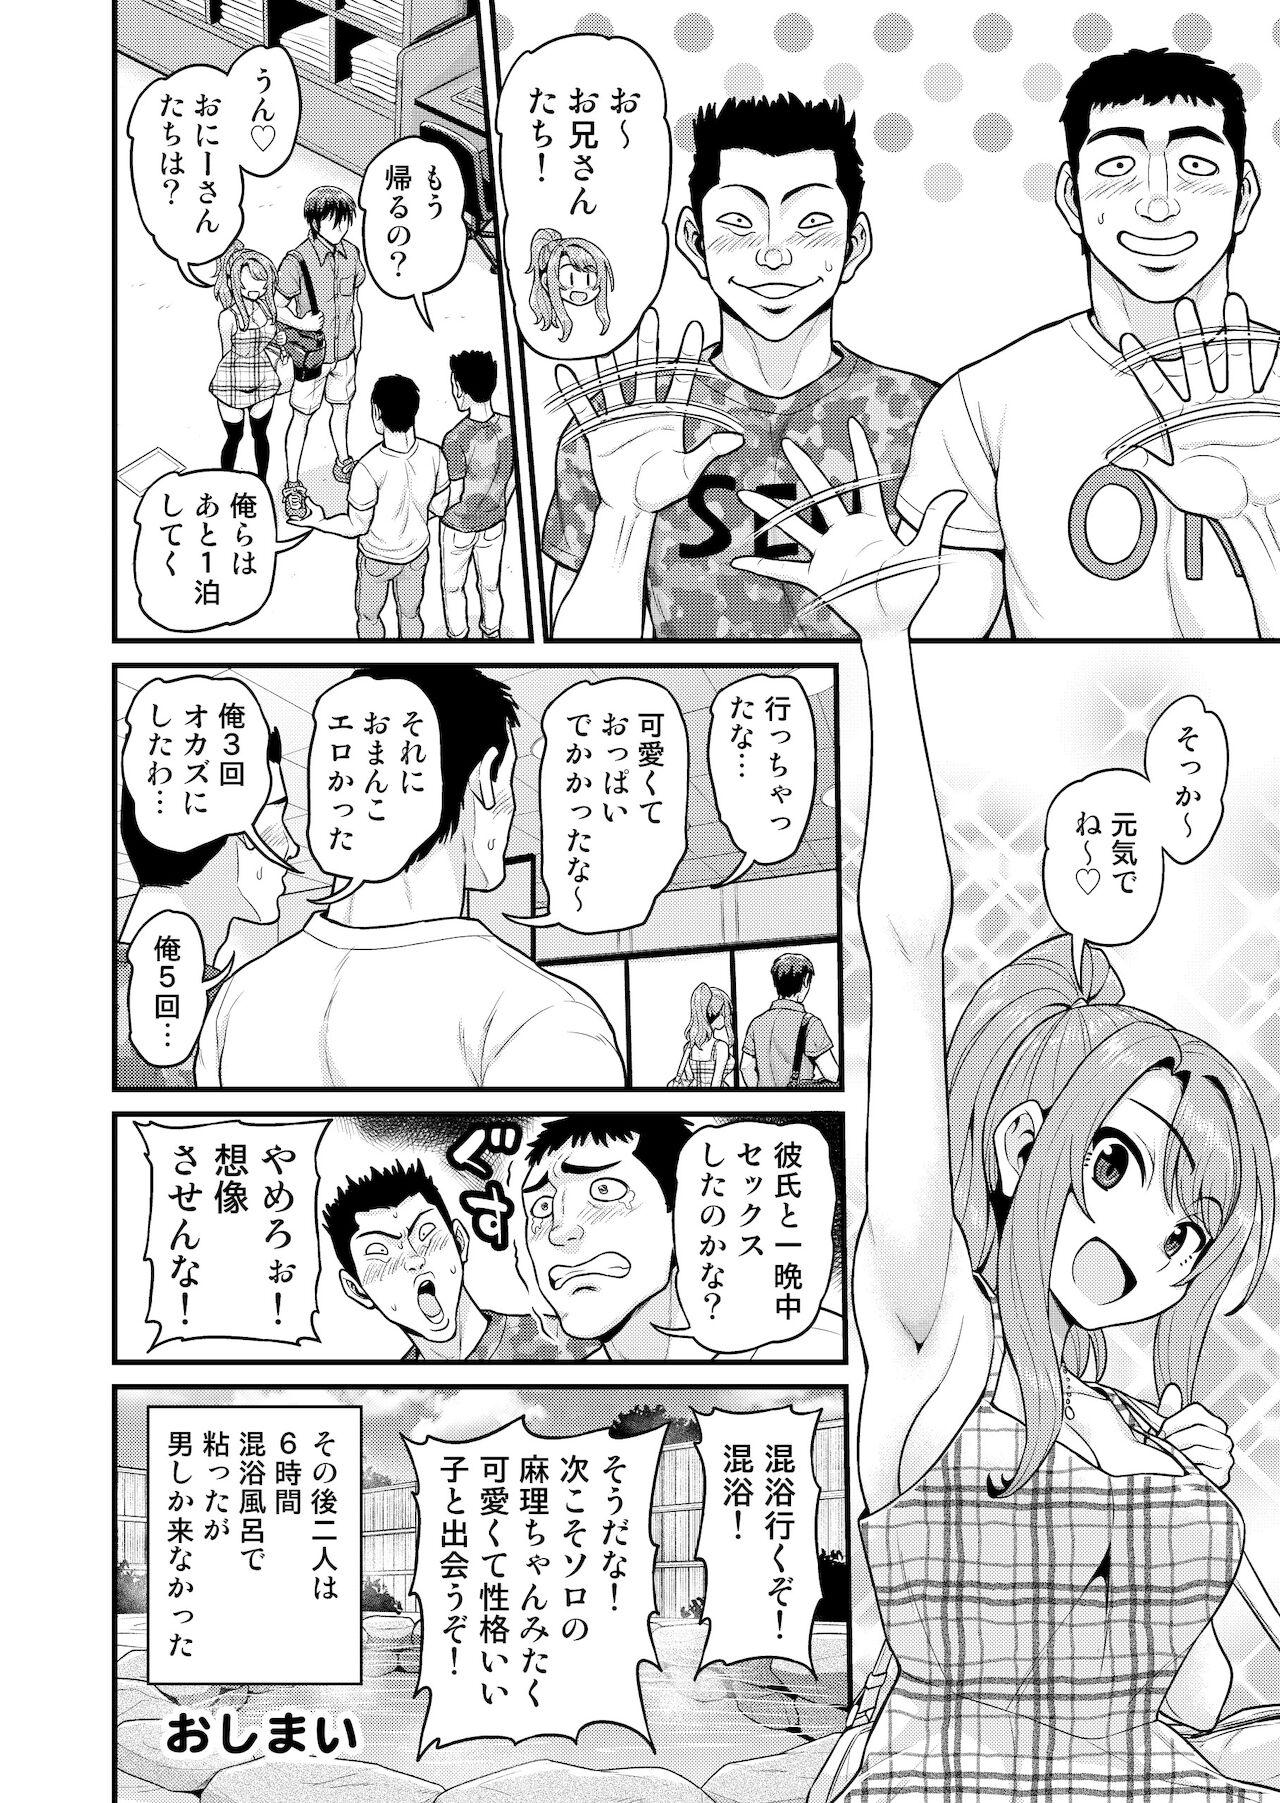 Large ゲーム友達の女の子と温泉旅行でヤる話 - Original Paja - Page 51